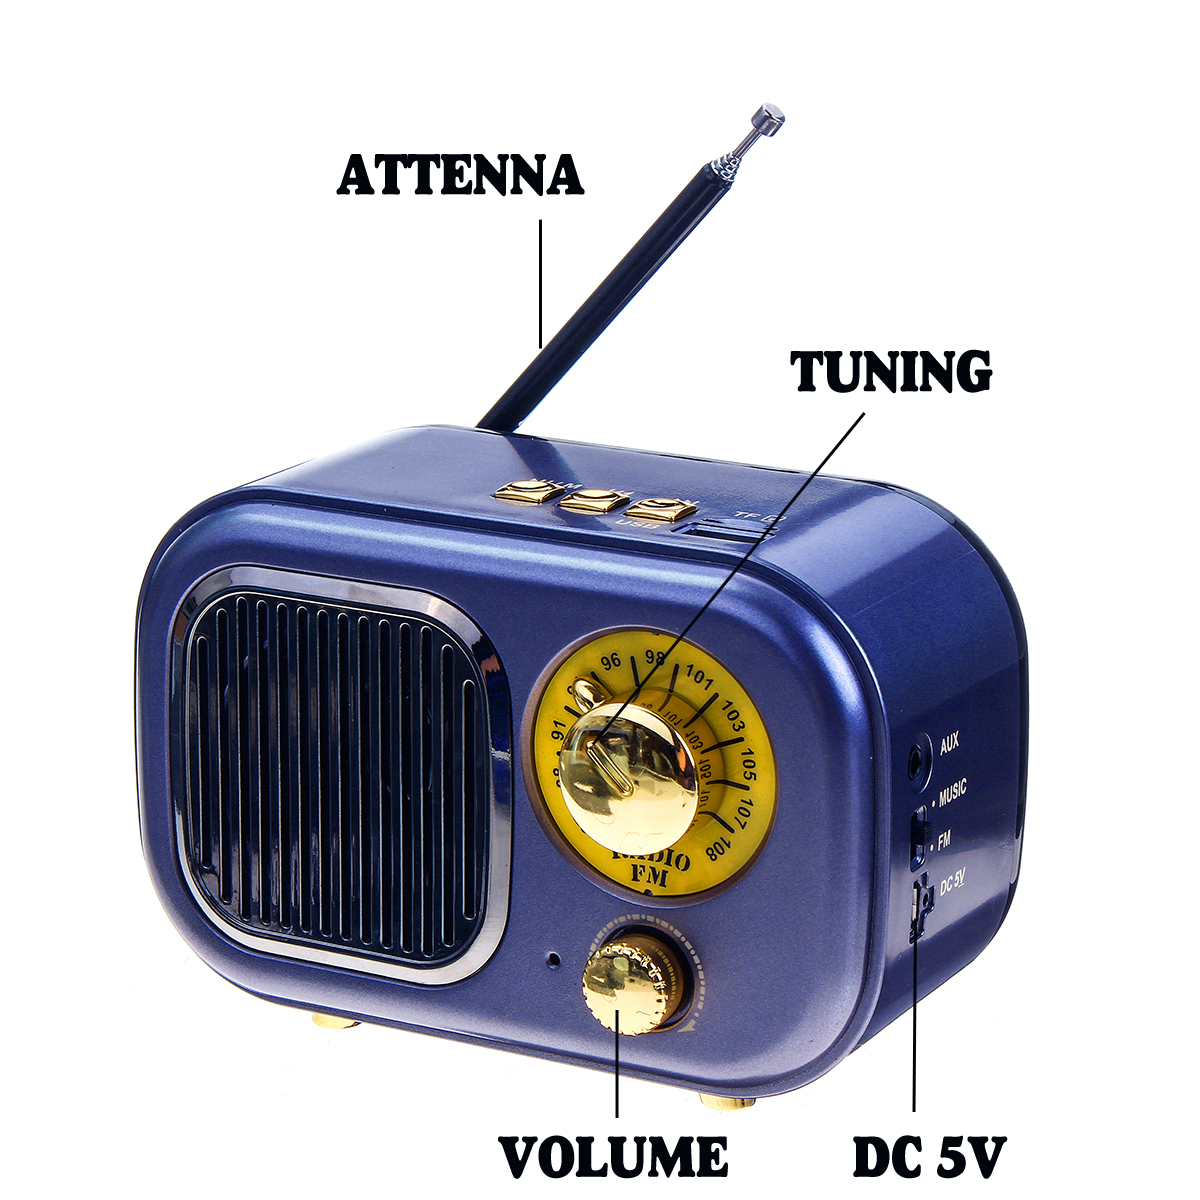 M-205BT-Portable-Retro-Radio-bluetooth-Speaker-MP3-Player-FM-Raido-TF-Card-U-Disk-AUX-Mini-Raido-Spe-1652934-3